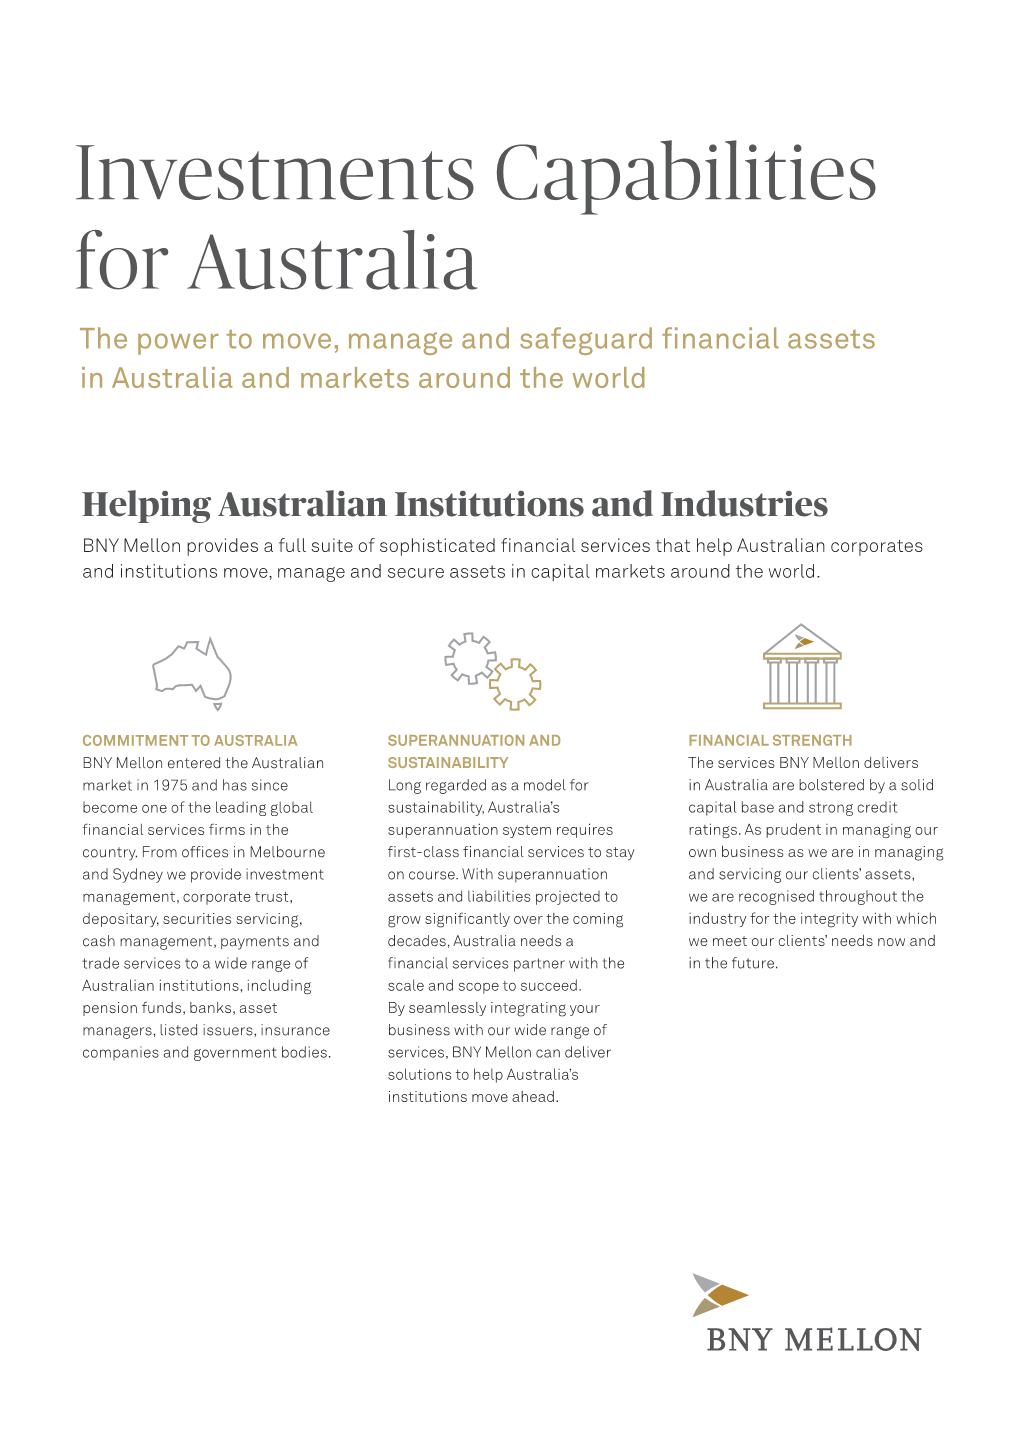 Download Investment Capabilities for Australia